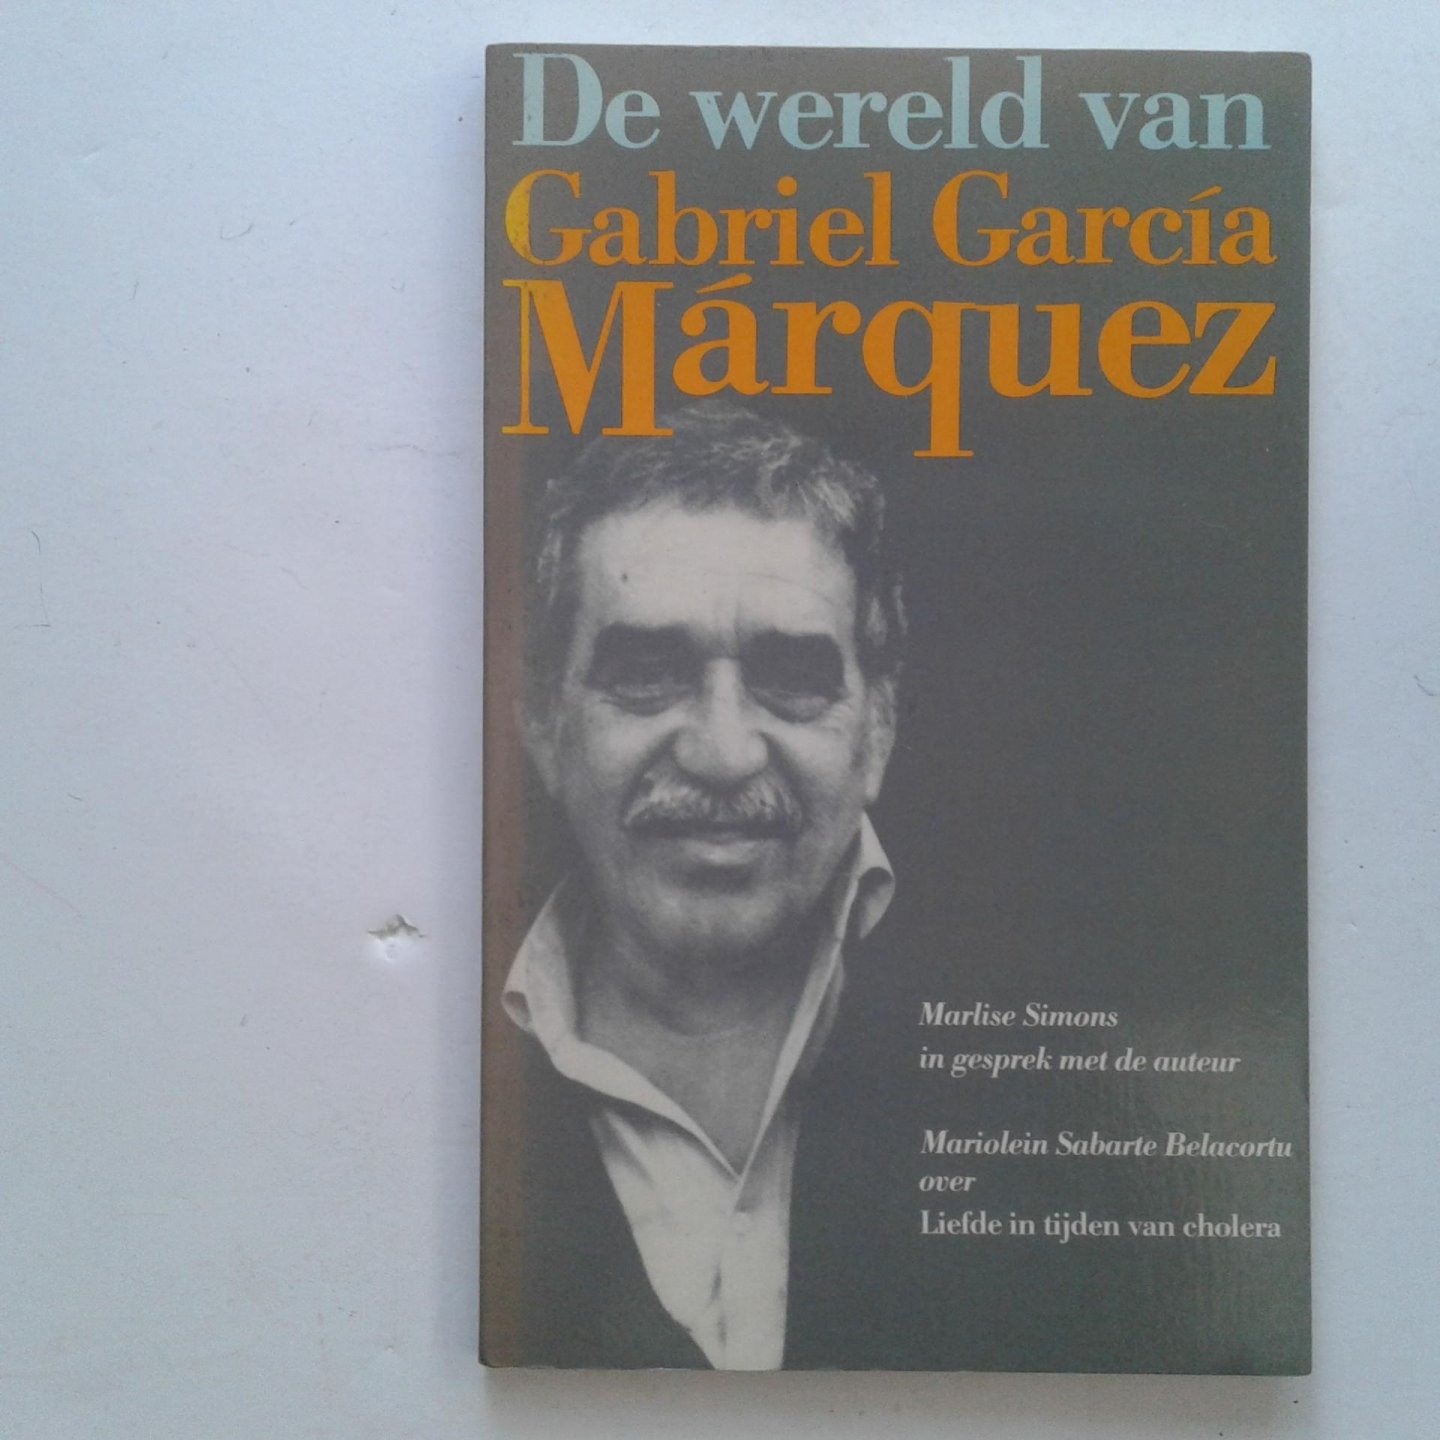 Simons, Marlise - De wereld van Gabriel Garcia Marquez